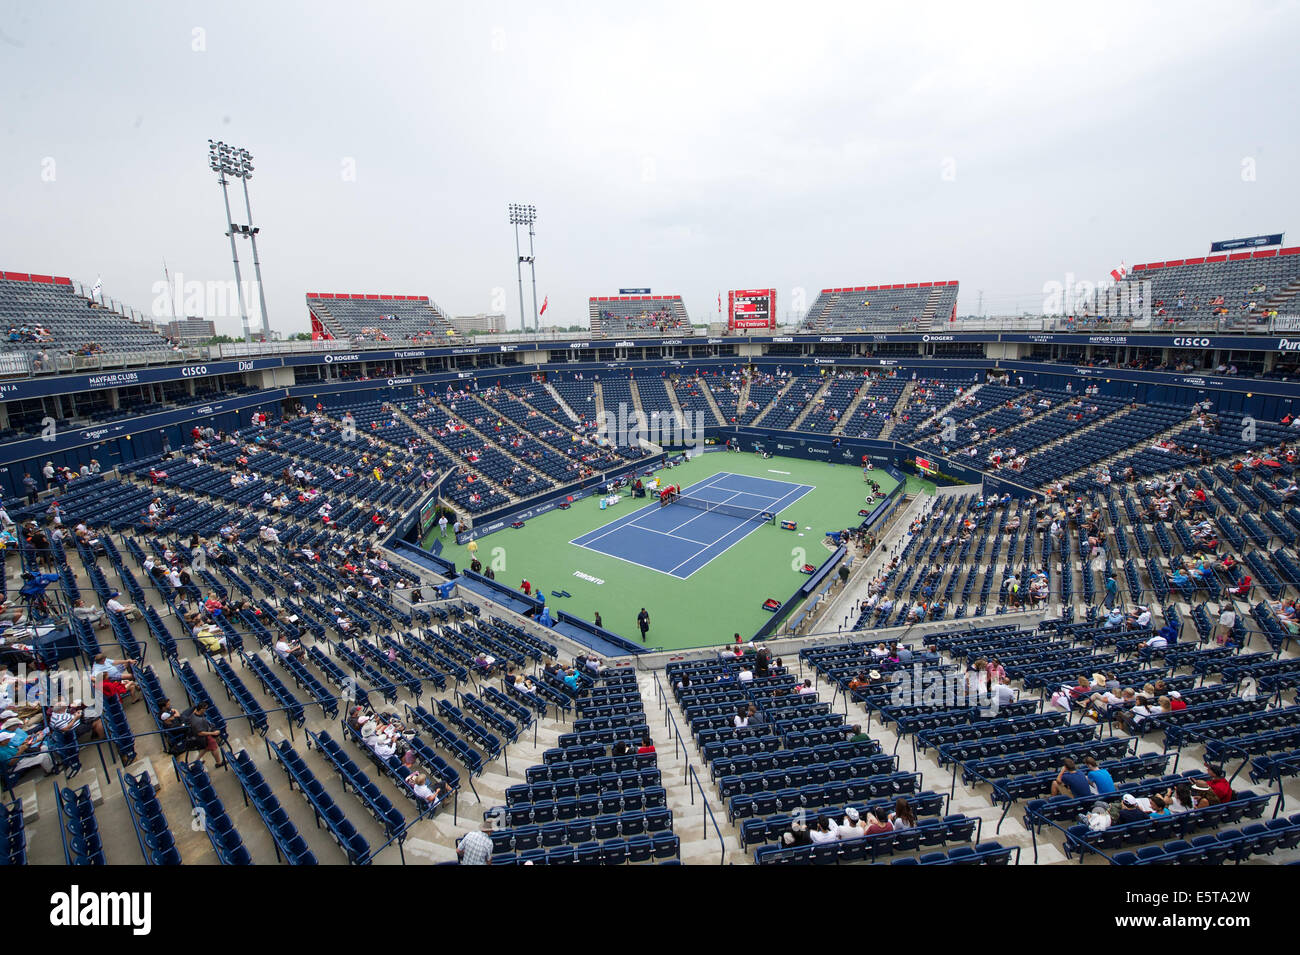 Toronto tennis stadium hi-res stock photography and images - Alamy